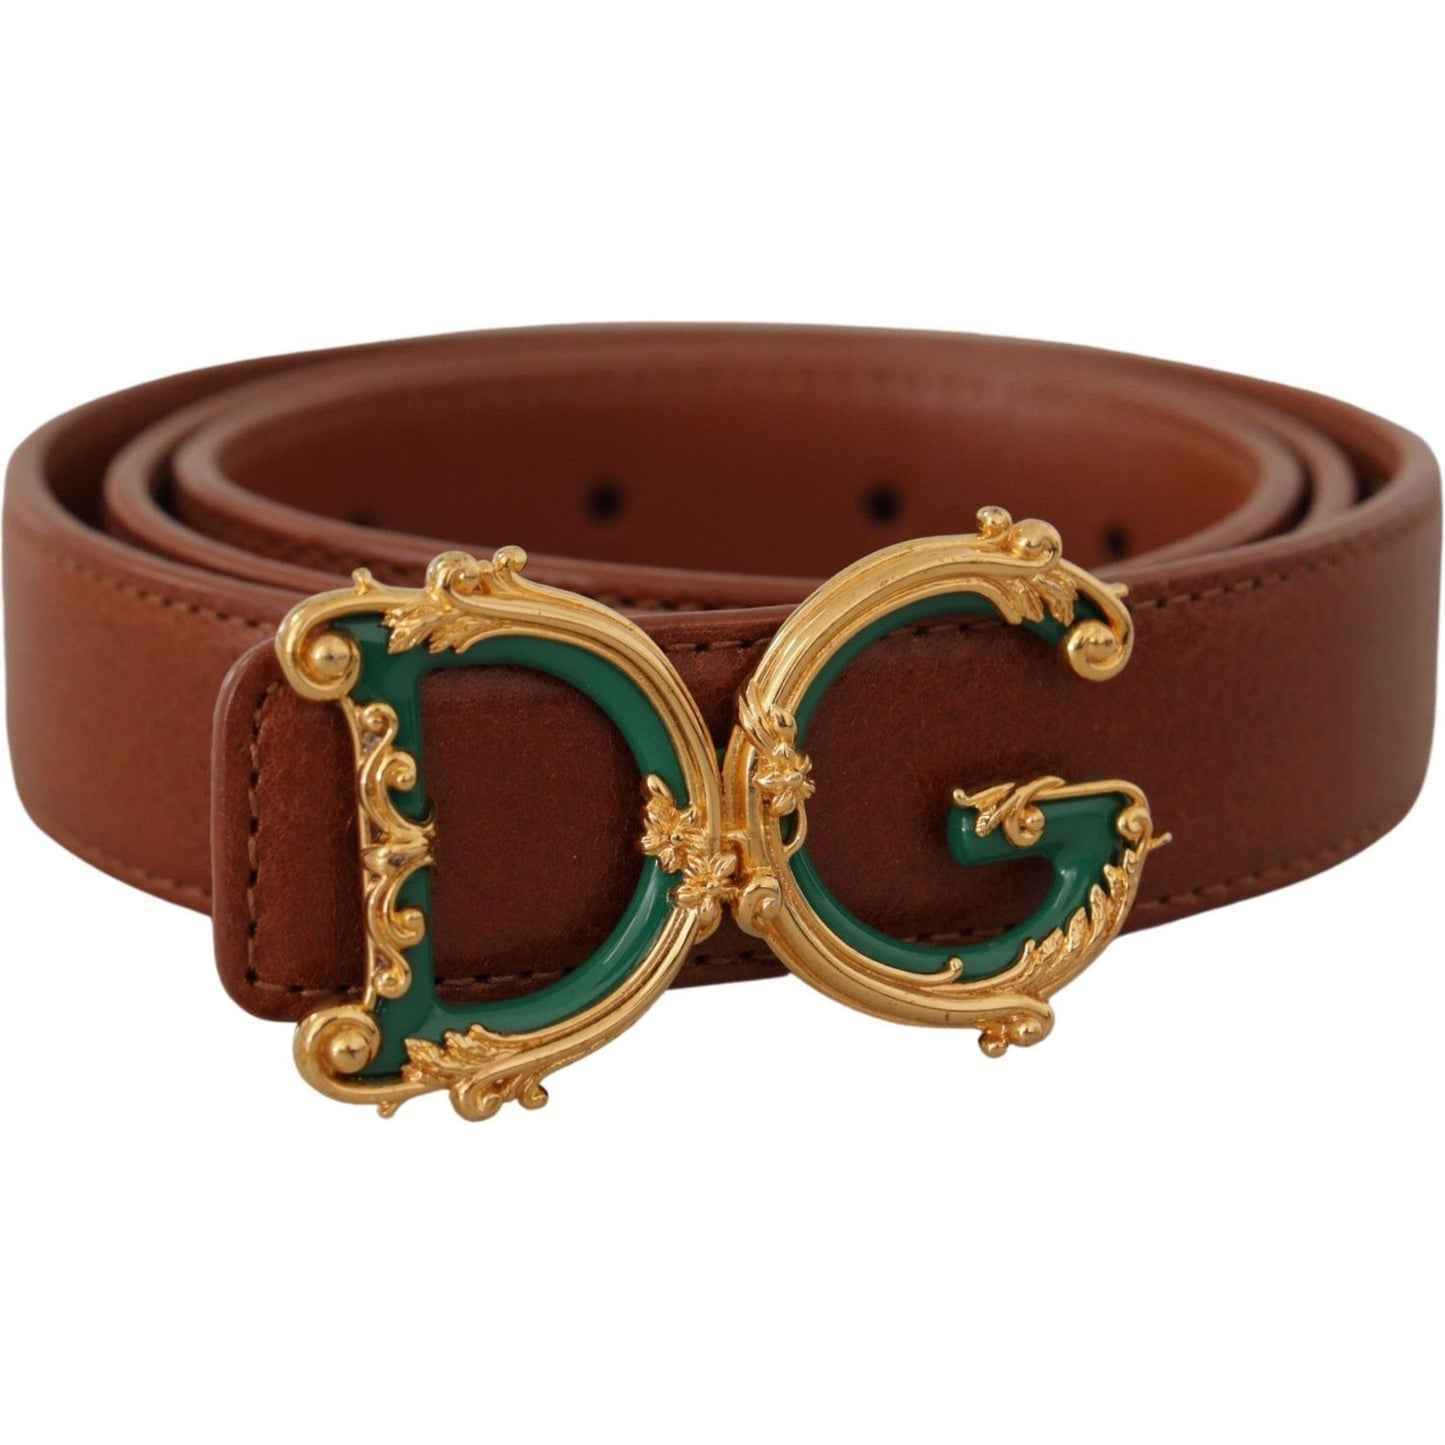 Dolce & Gabbana Elegant Leather Belt with Logo Buckle brown-leather-baroque-gold-dg-logo-waist-buckle-belt IMG_8924-57a5fc6b-1b1.jpg